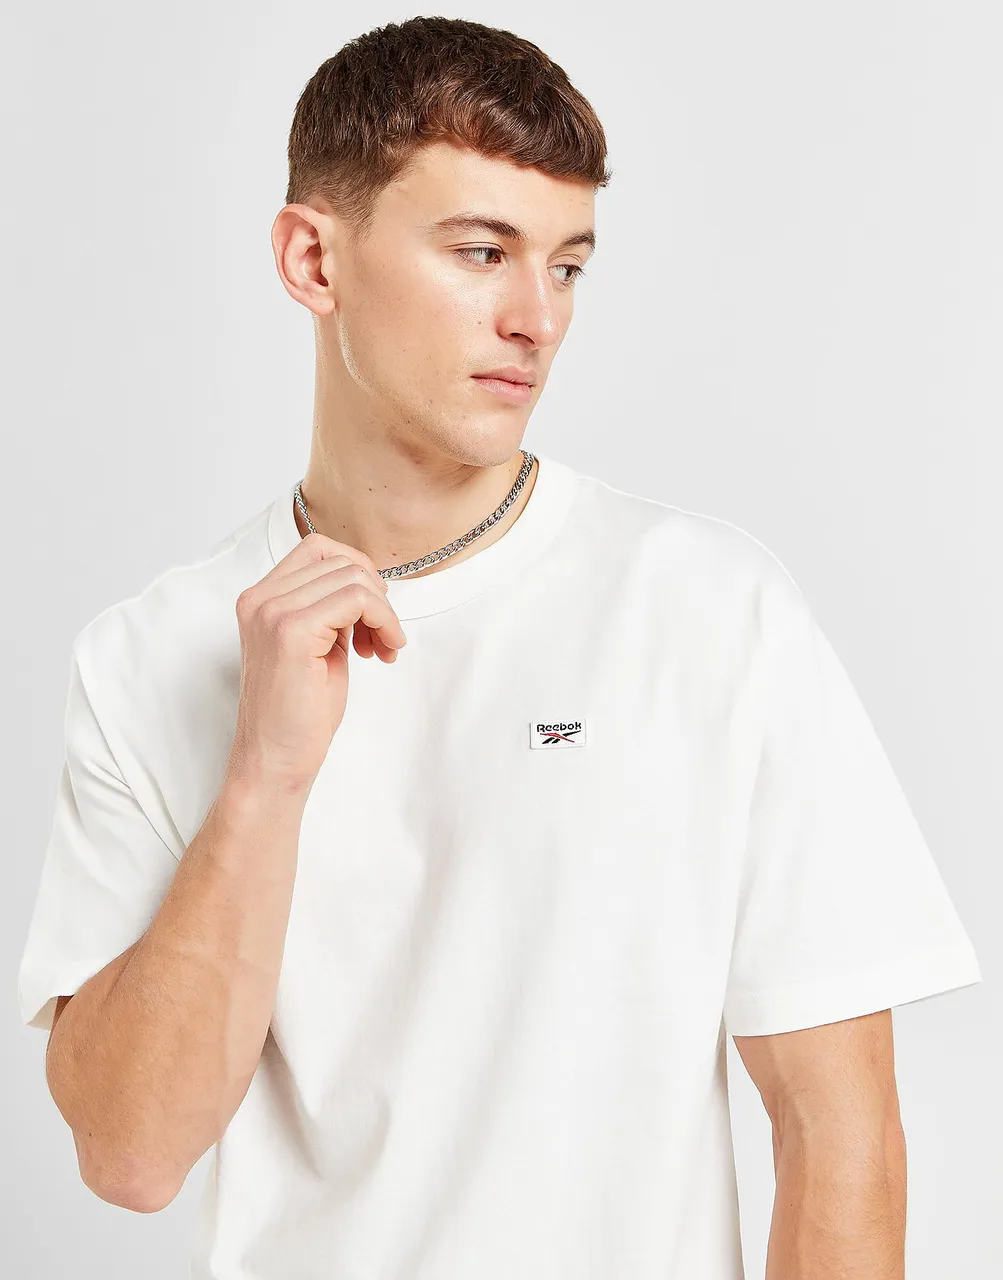 Reebok Tennis T-Shirt, White